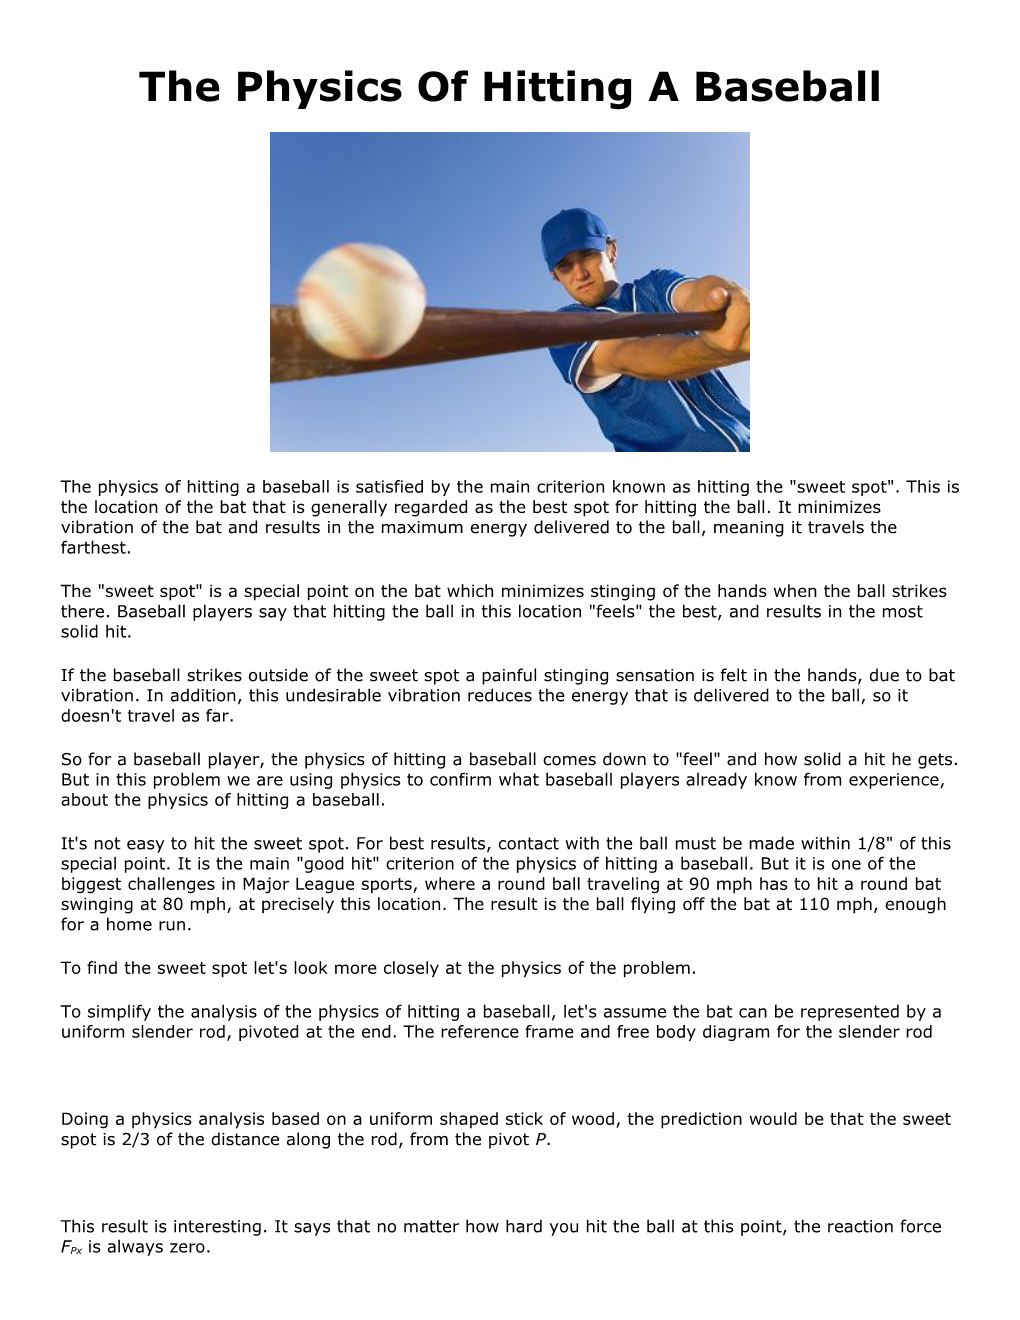 The Physics of Hitting a Baseball